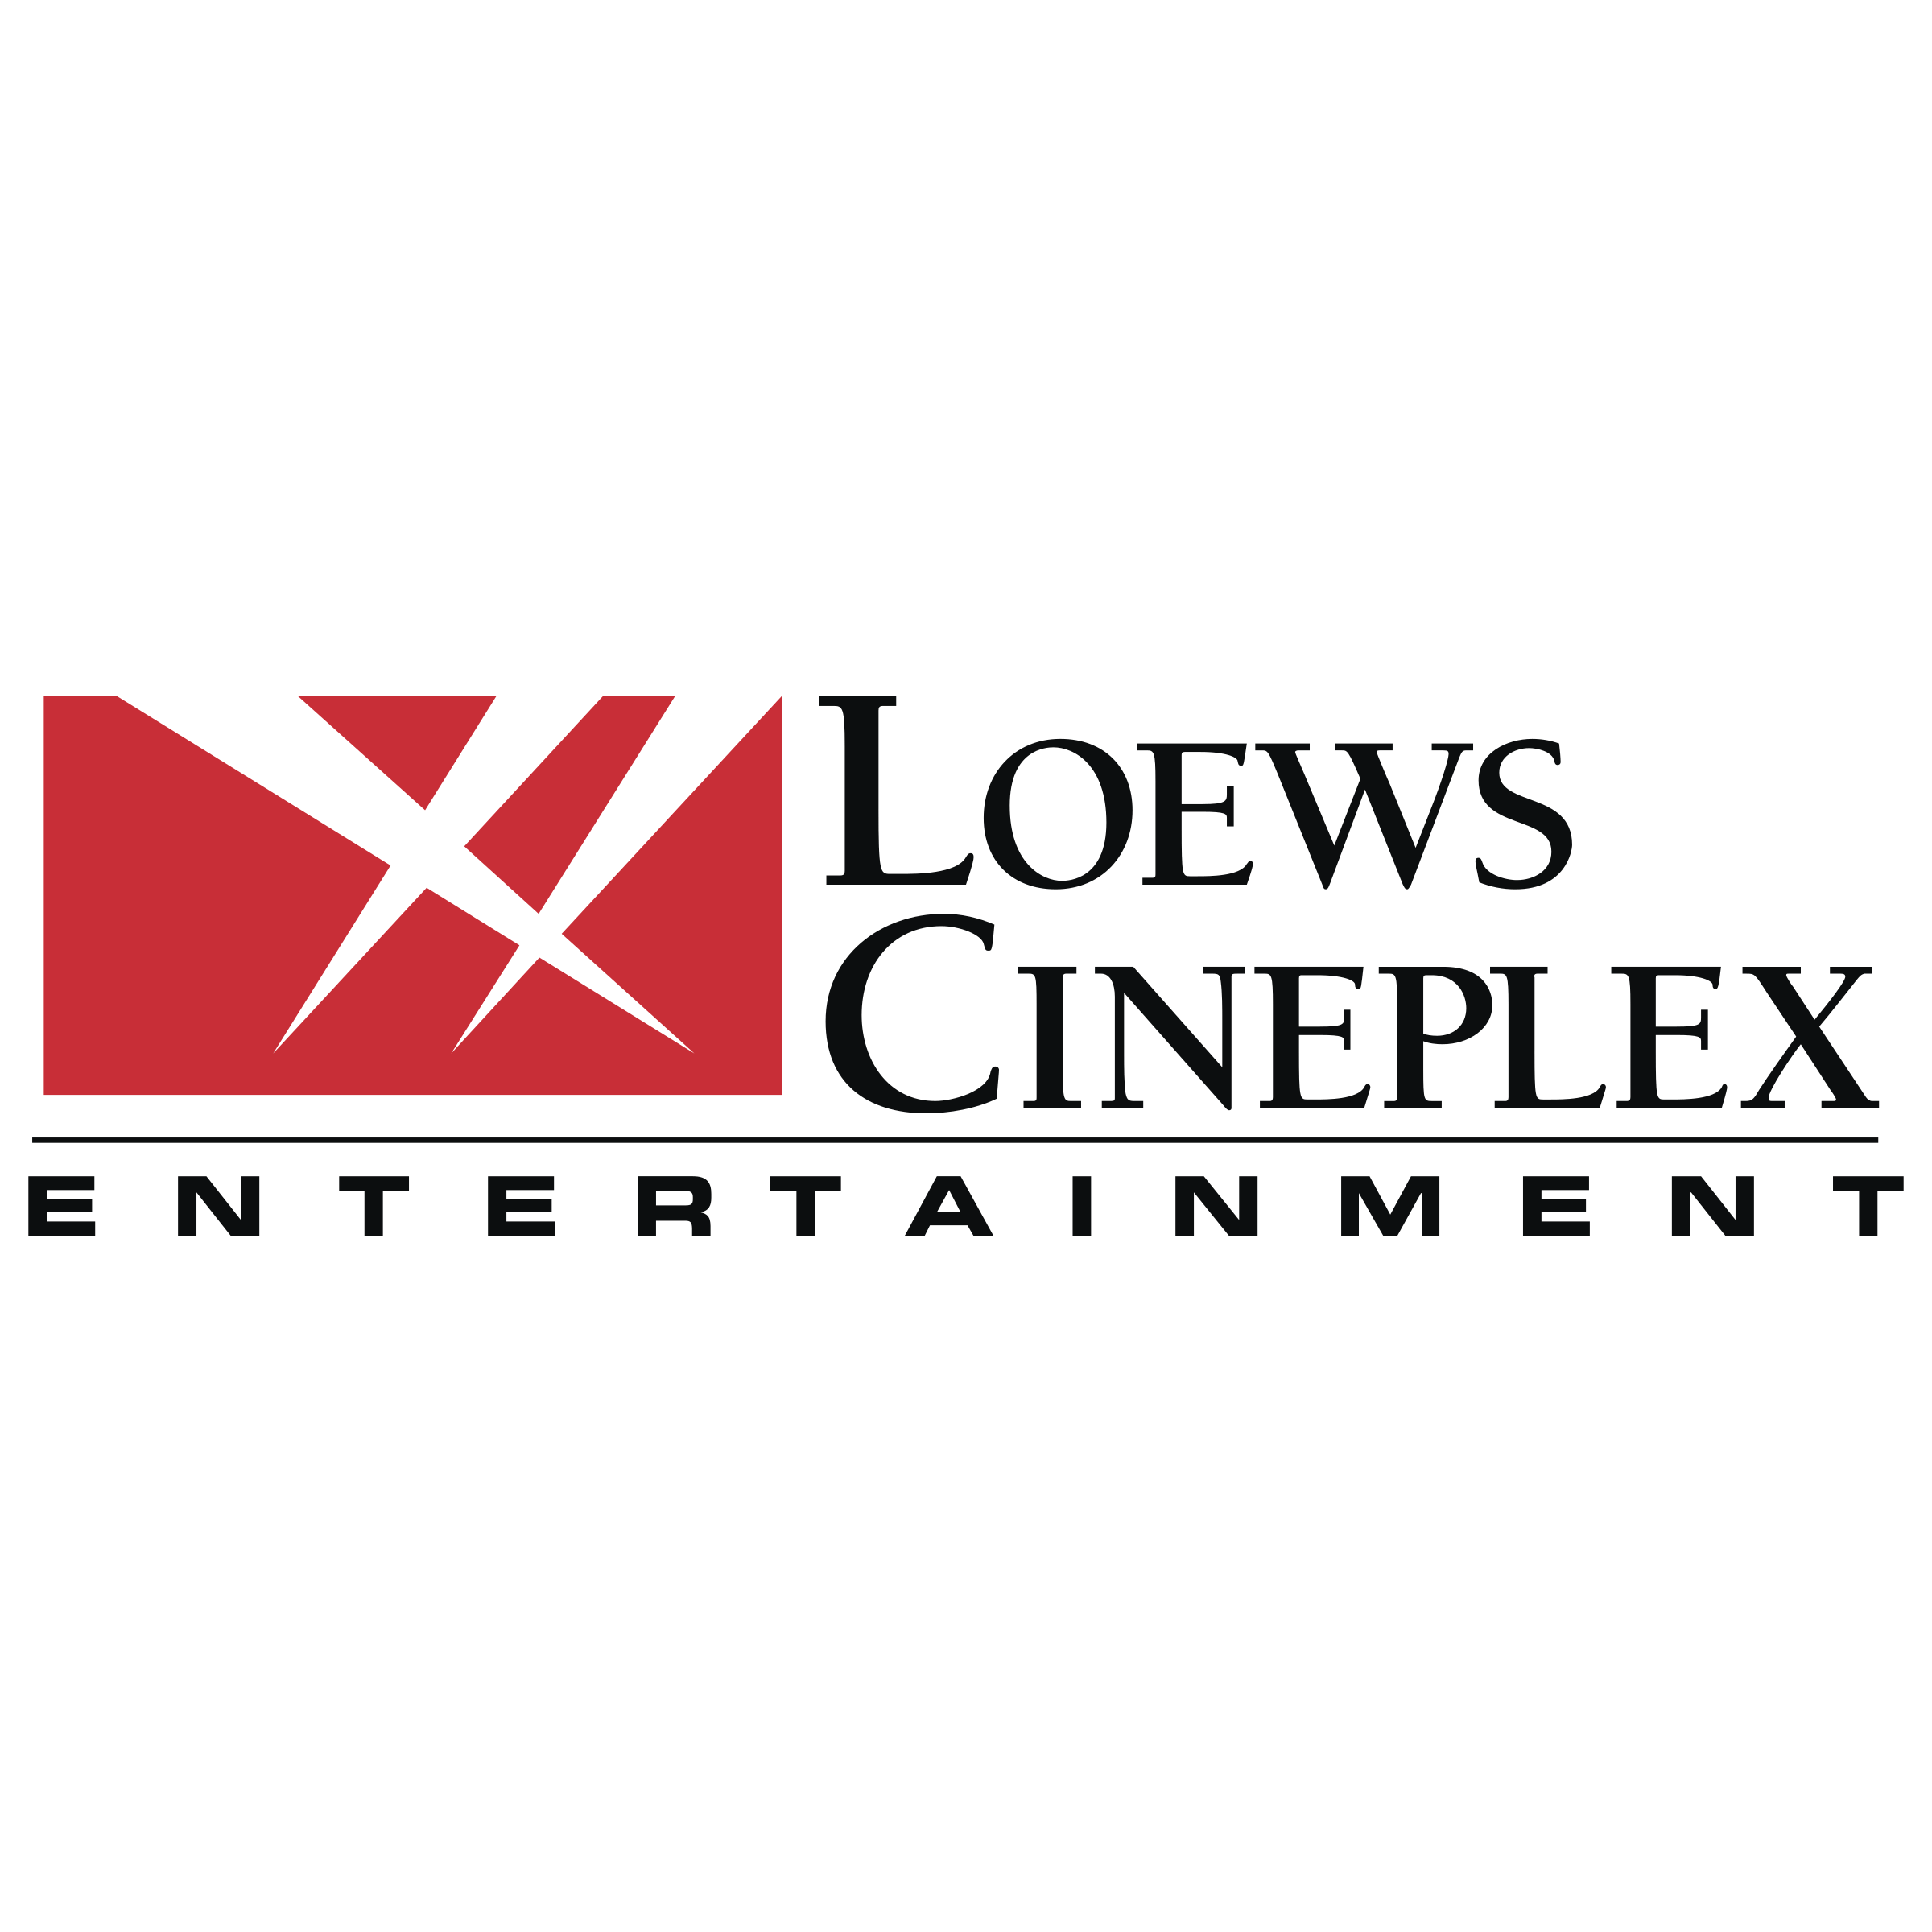 Cineplex Logo - Loews Cineplex Logo PNG Transparent & SVG Vector - Freebie Supply